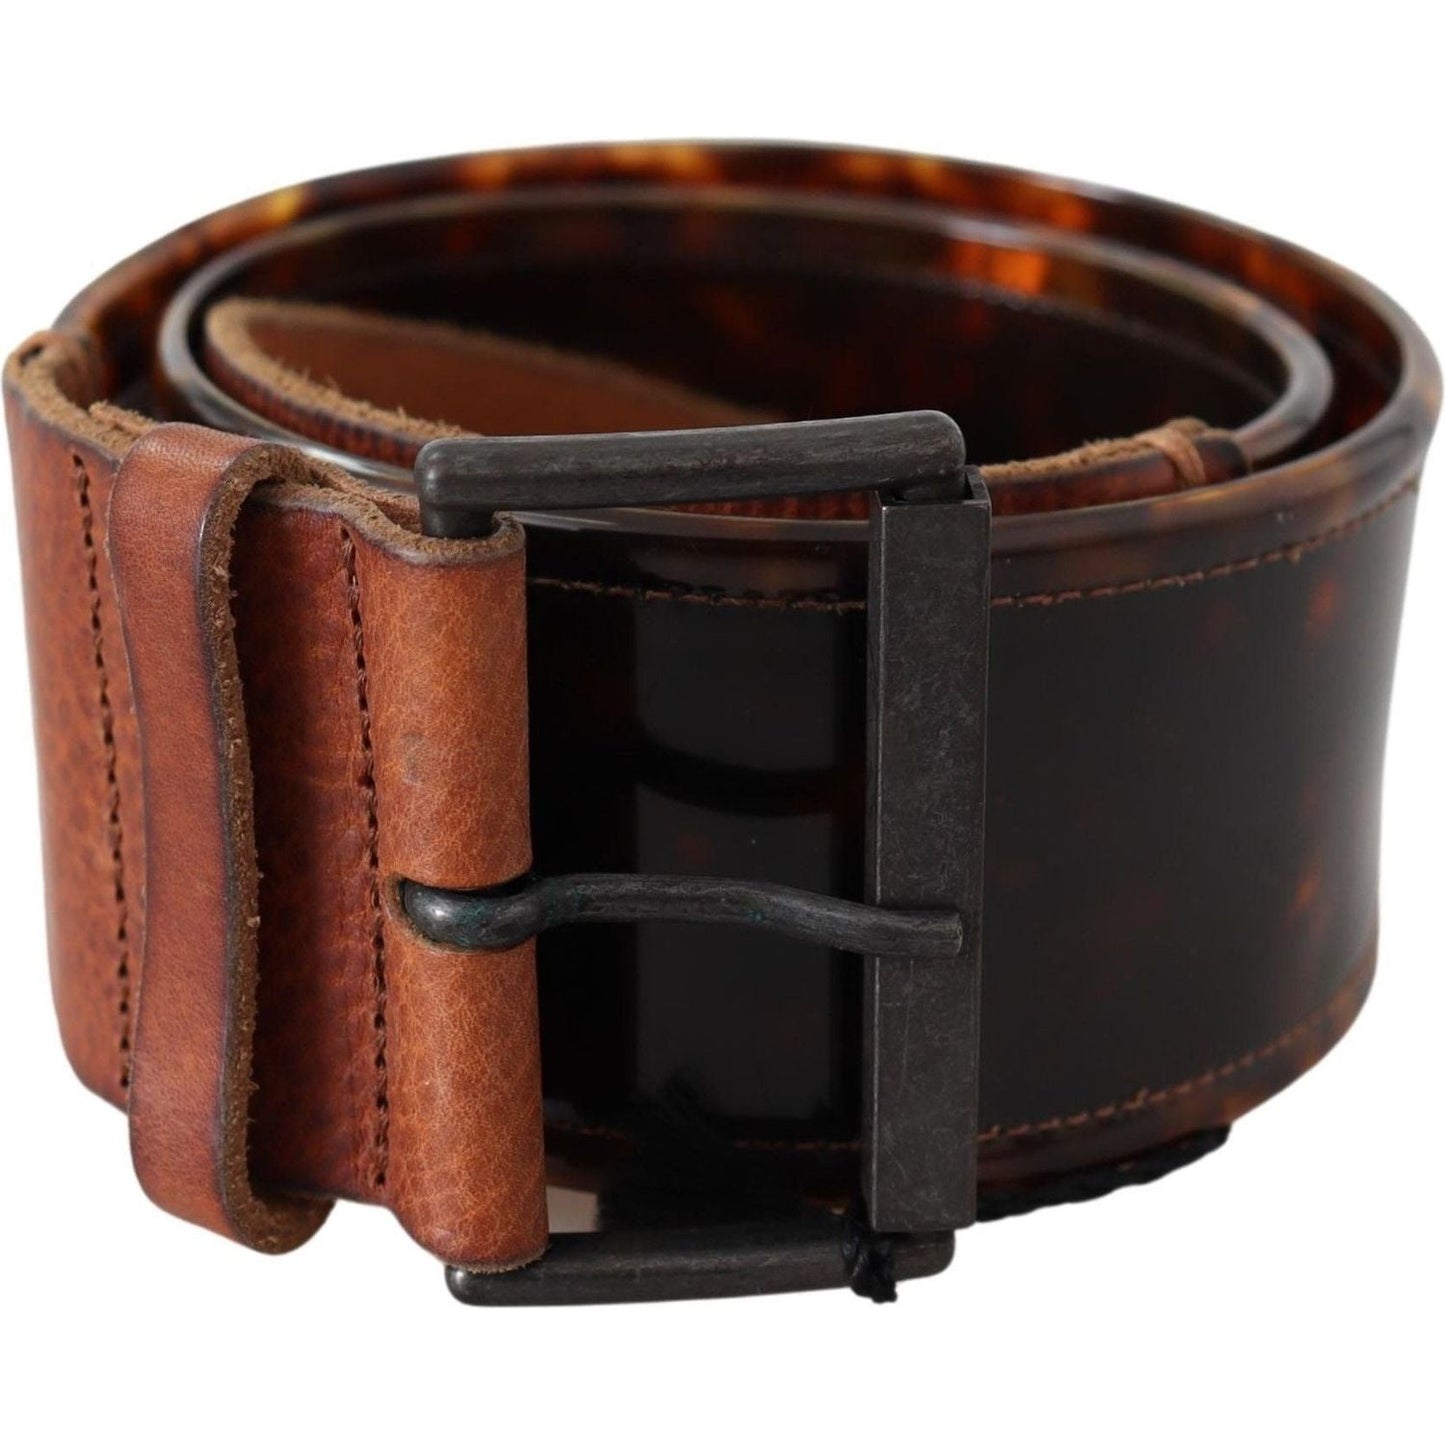 Ermanno Scervino Elegant Dark Brown Leather Belt with Vintage Buckle dark-brown-leather-wide-buckle-belt WOMAN BELTS IMG_6981-37ca05ba-442.jpg